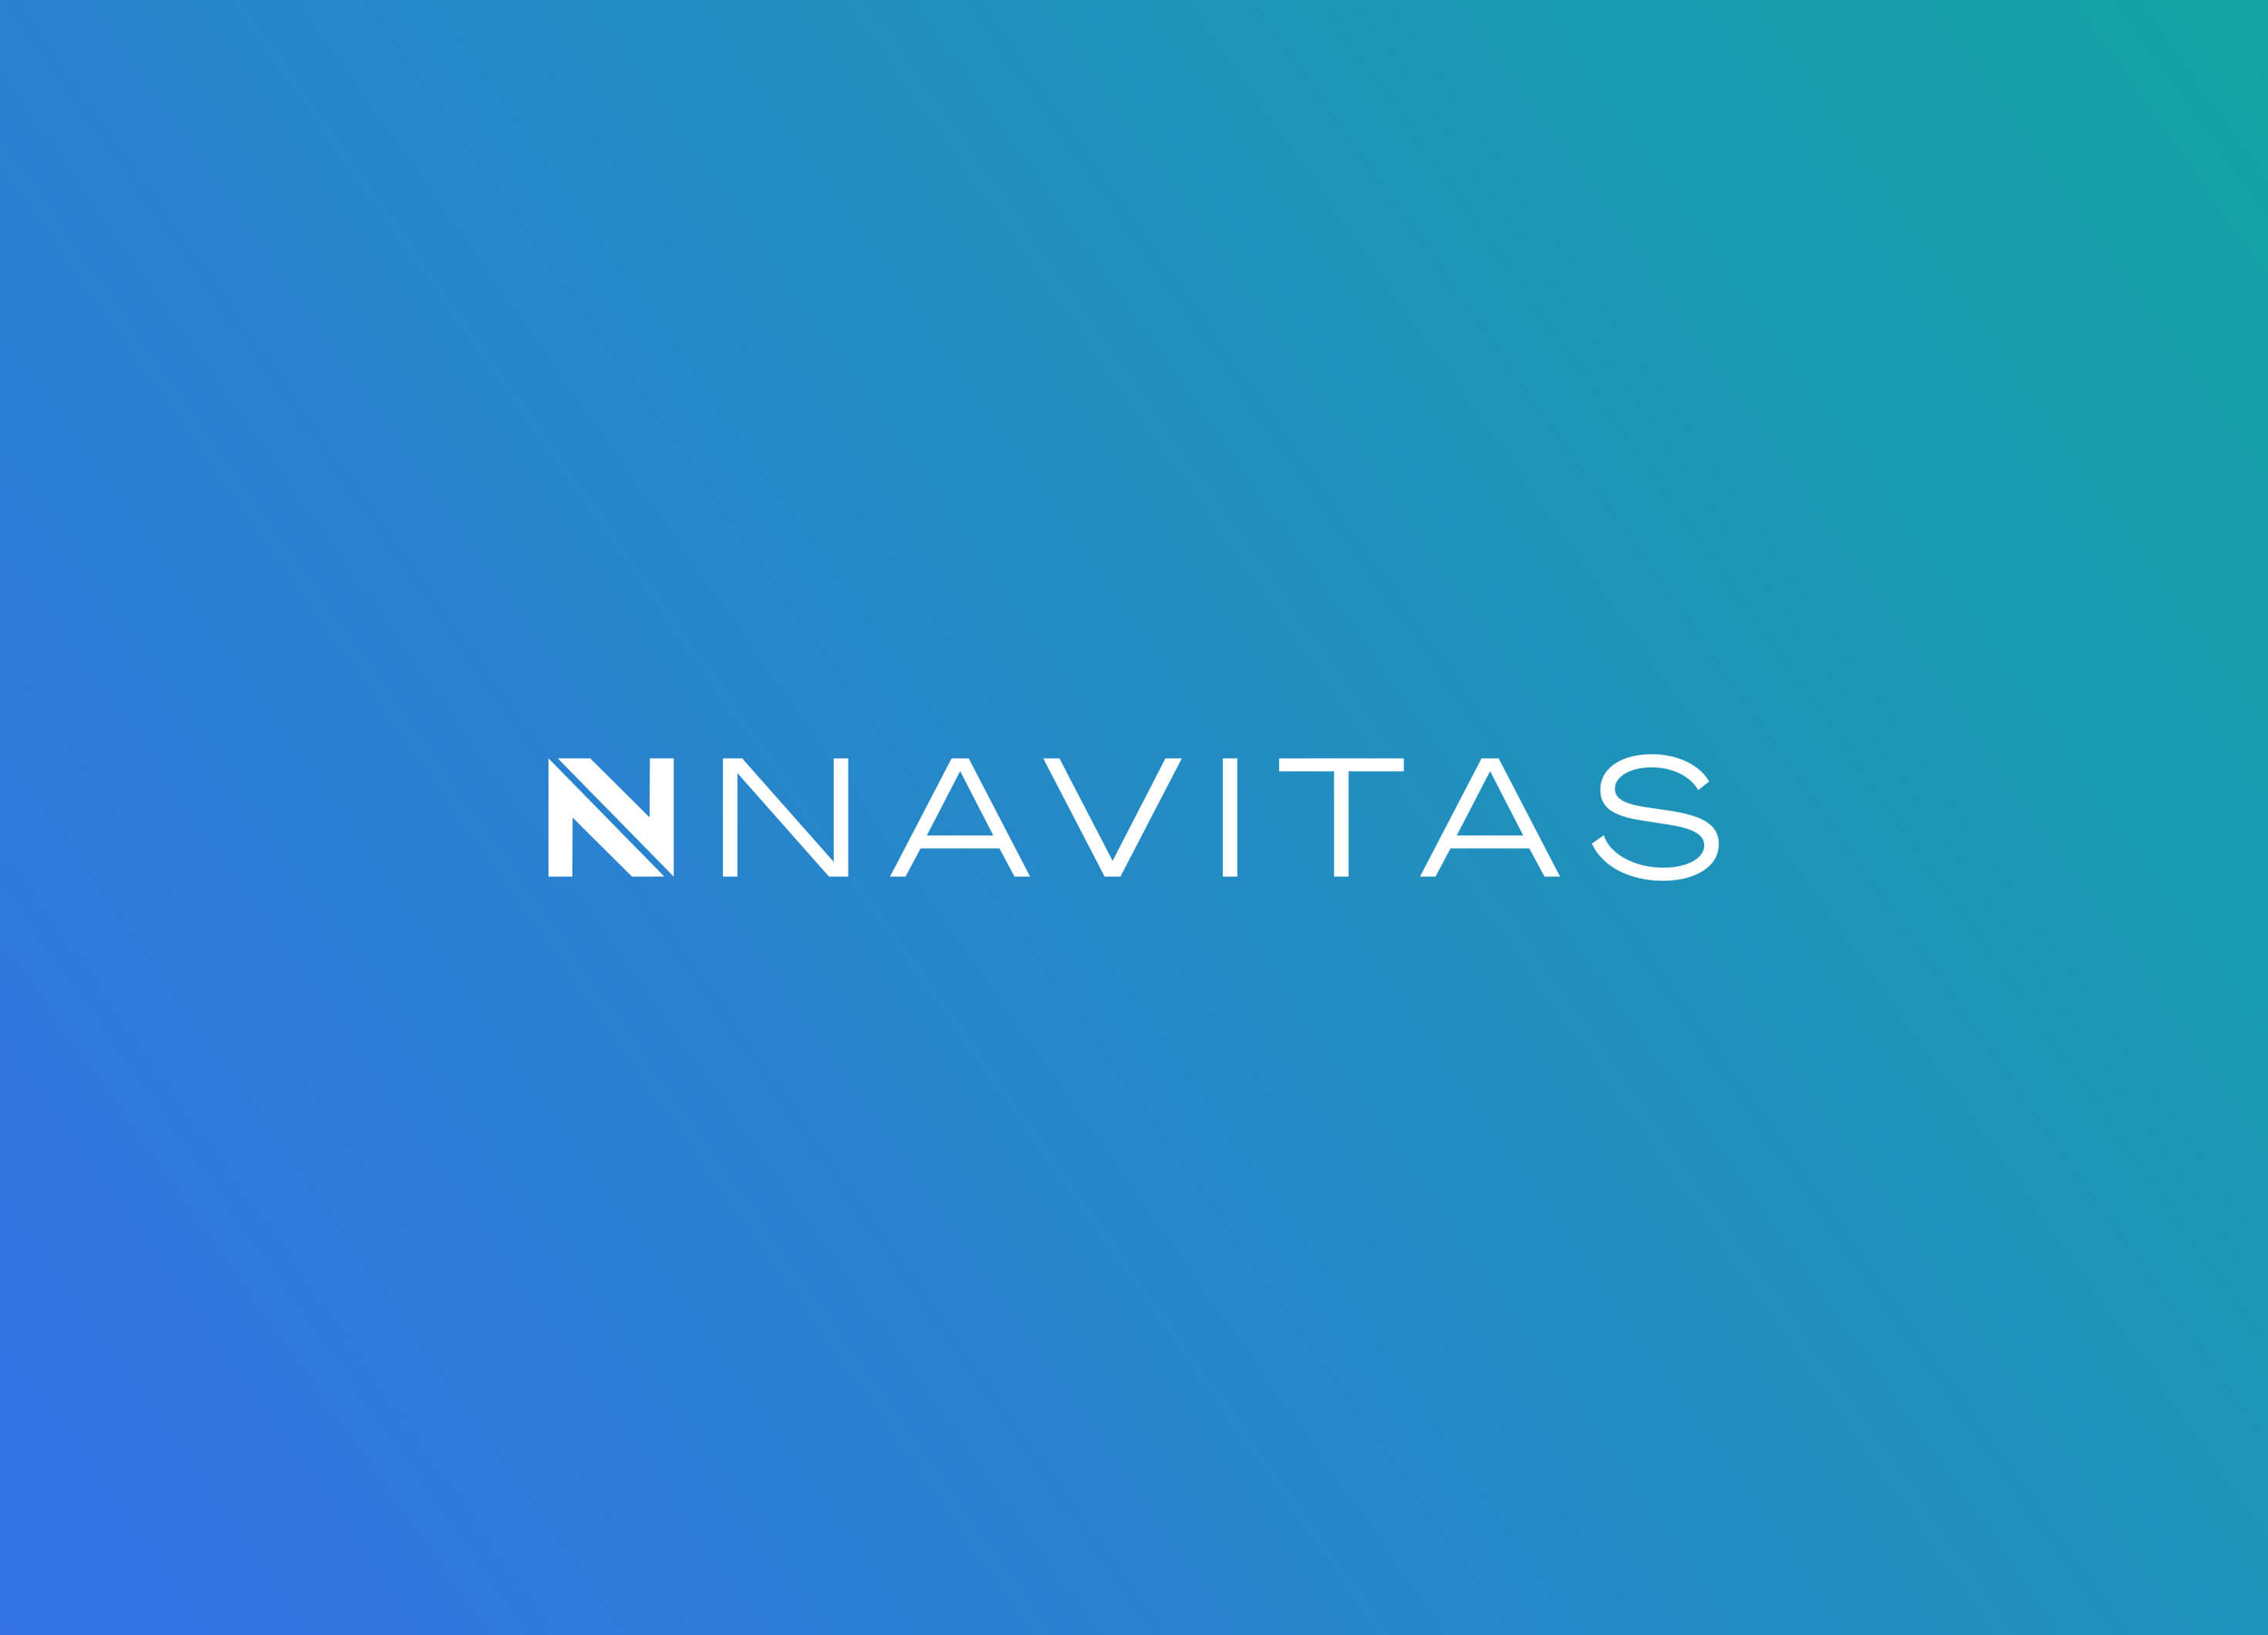 Primary logo design for Navitas, Energy recruitment specialist